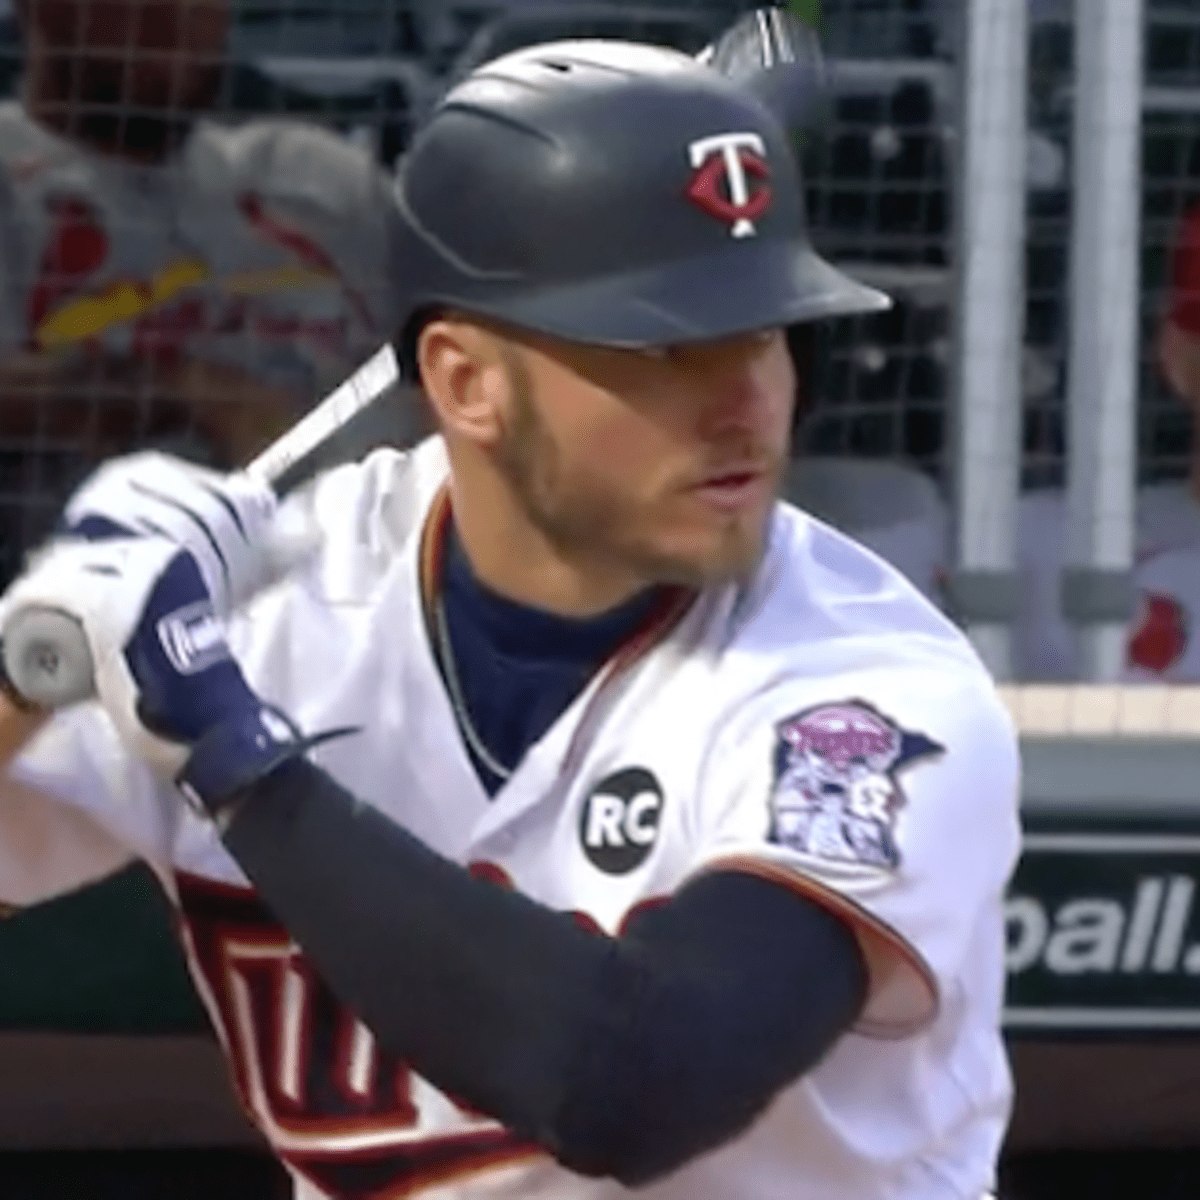 Josh Donaldson has injury scare 1 inning into Twins opener - Bring